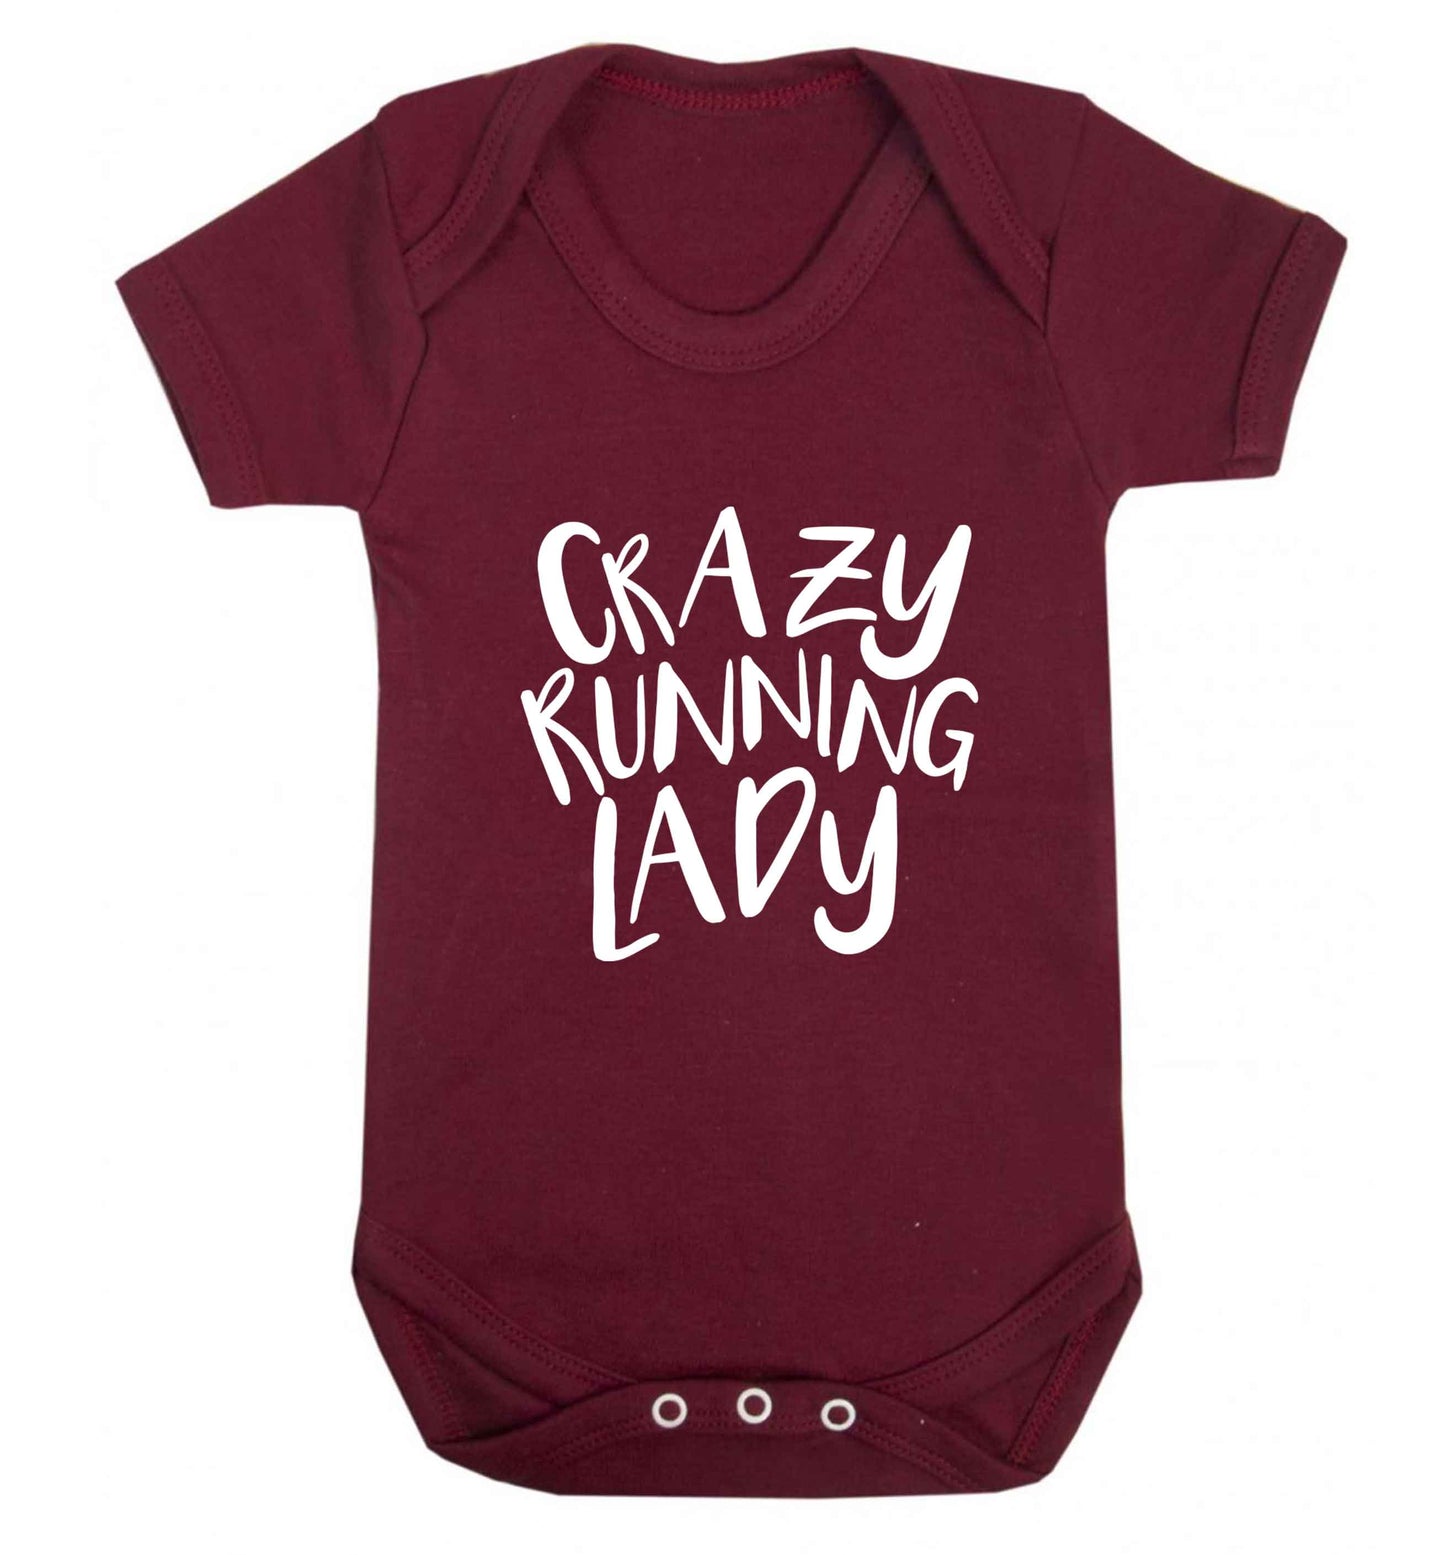 Crazy running lady baby vest maroon 18-24 months